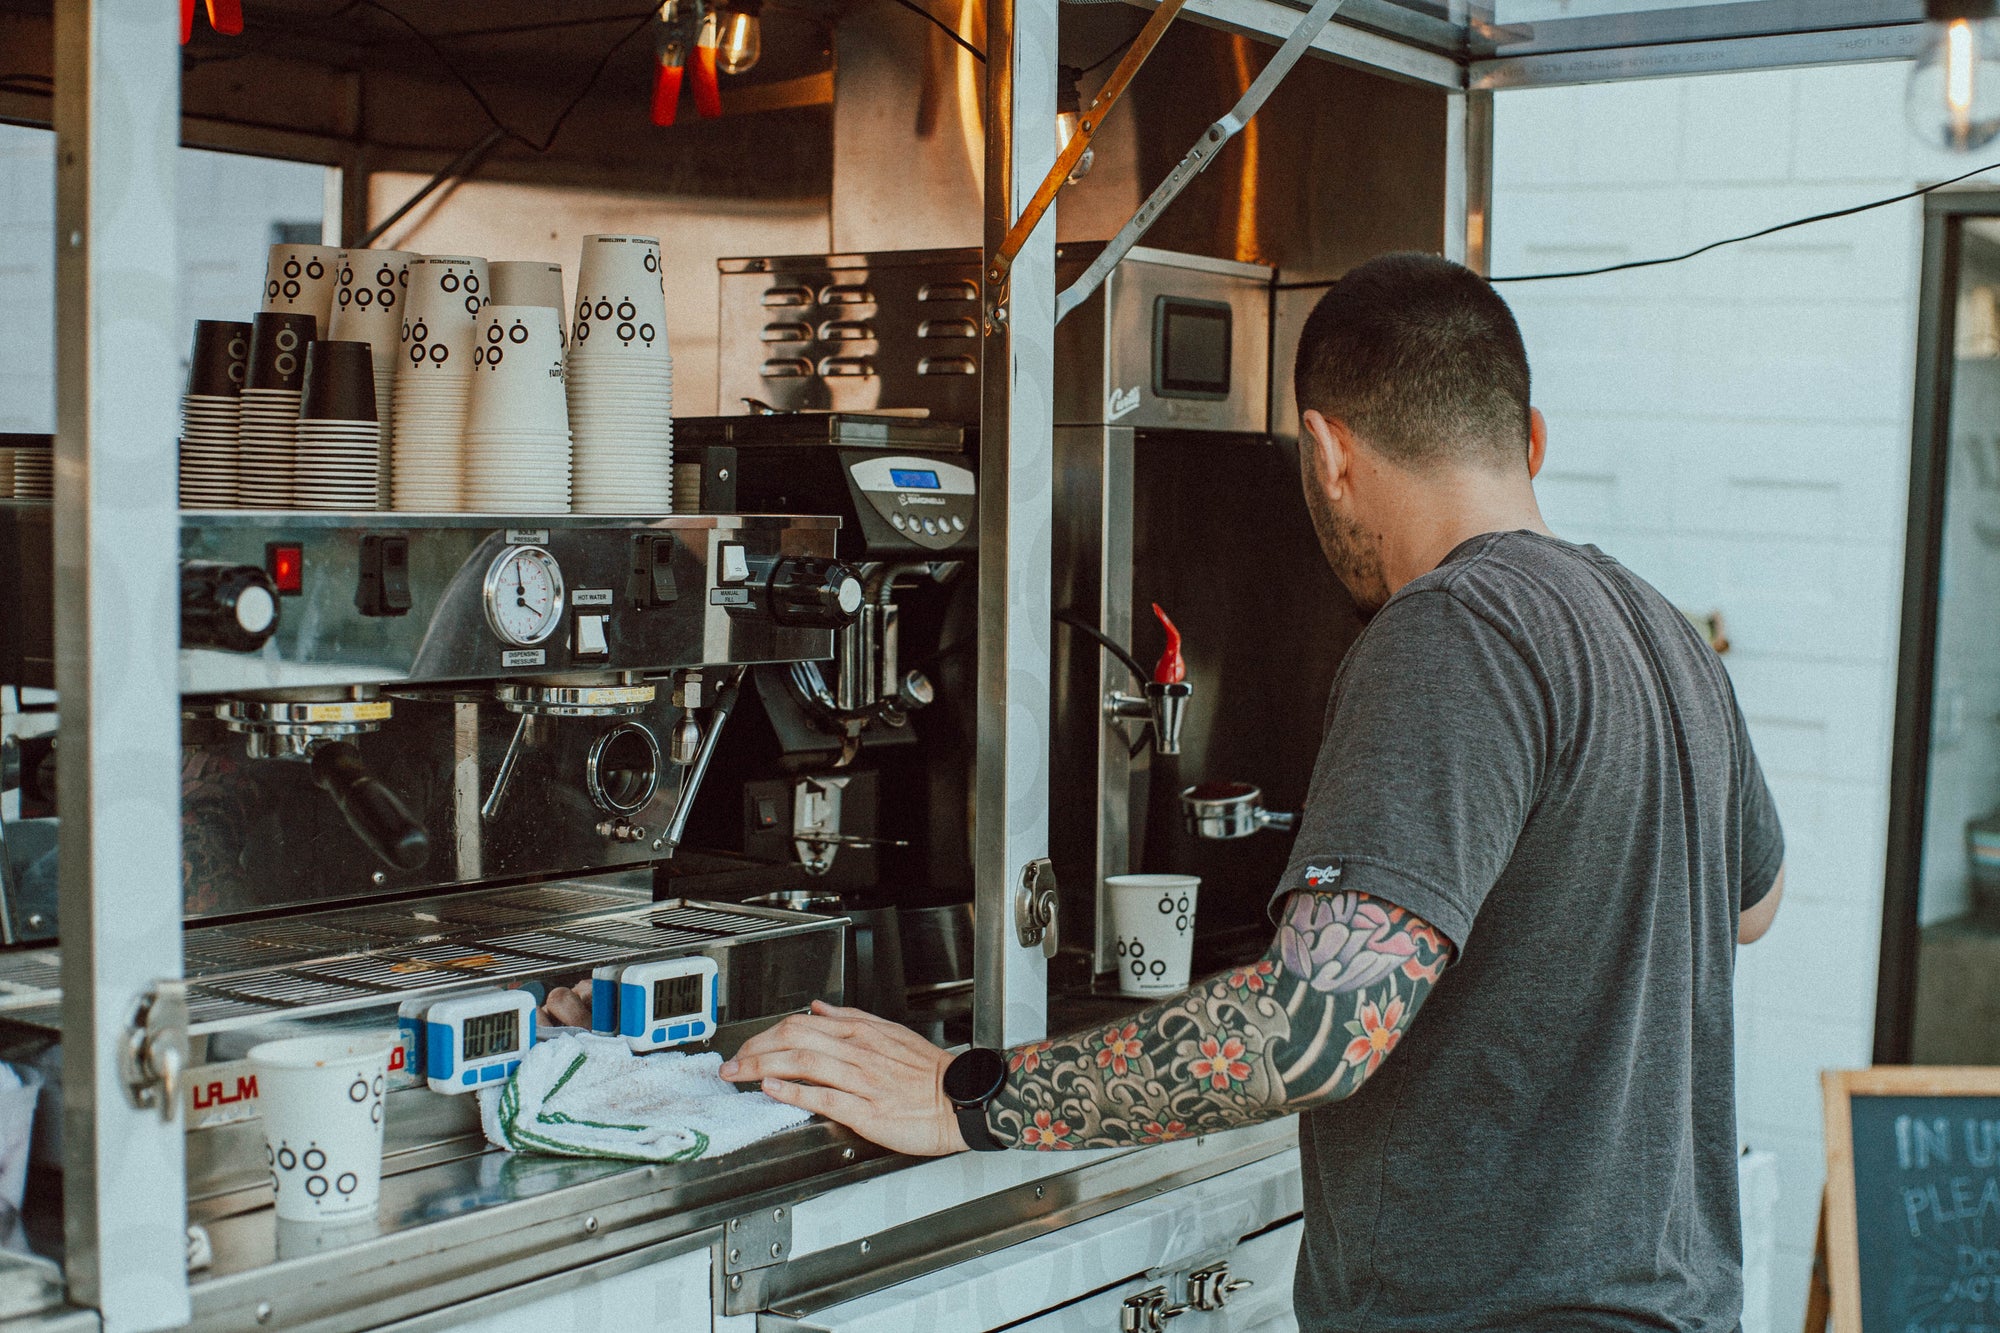 barista standing in front of espresso machine and grinder